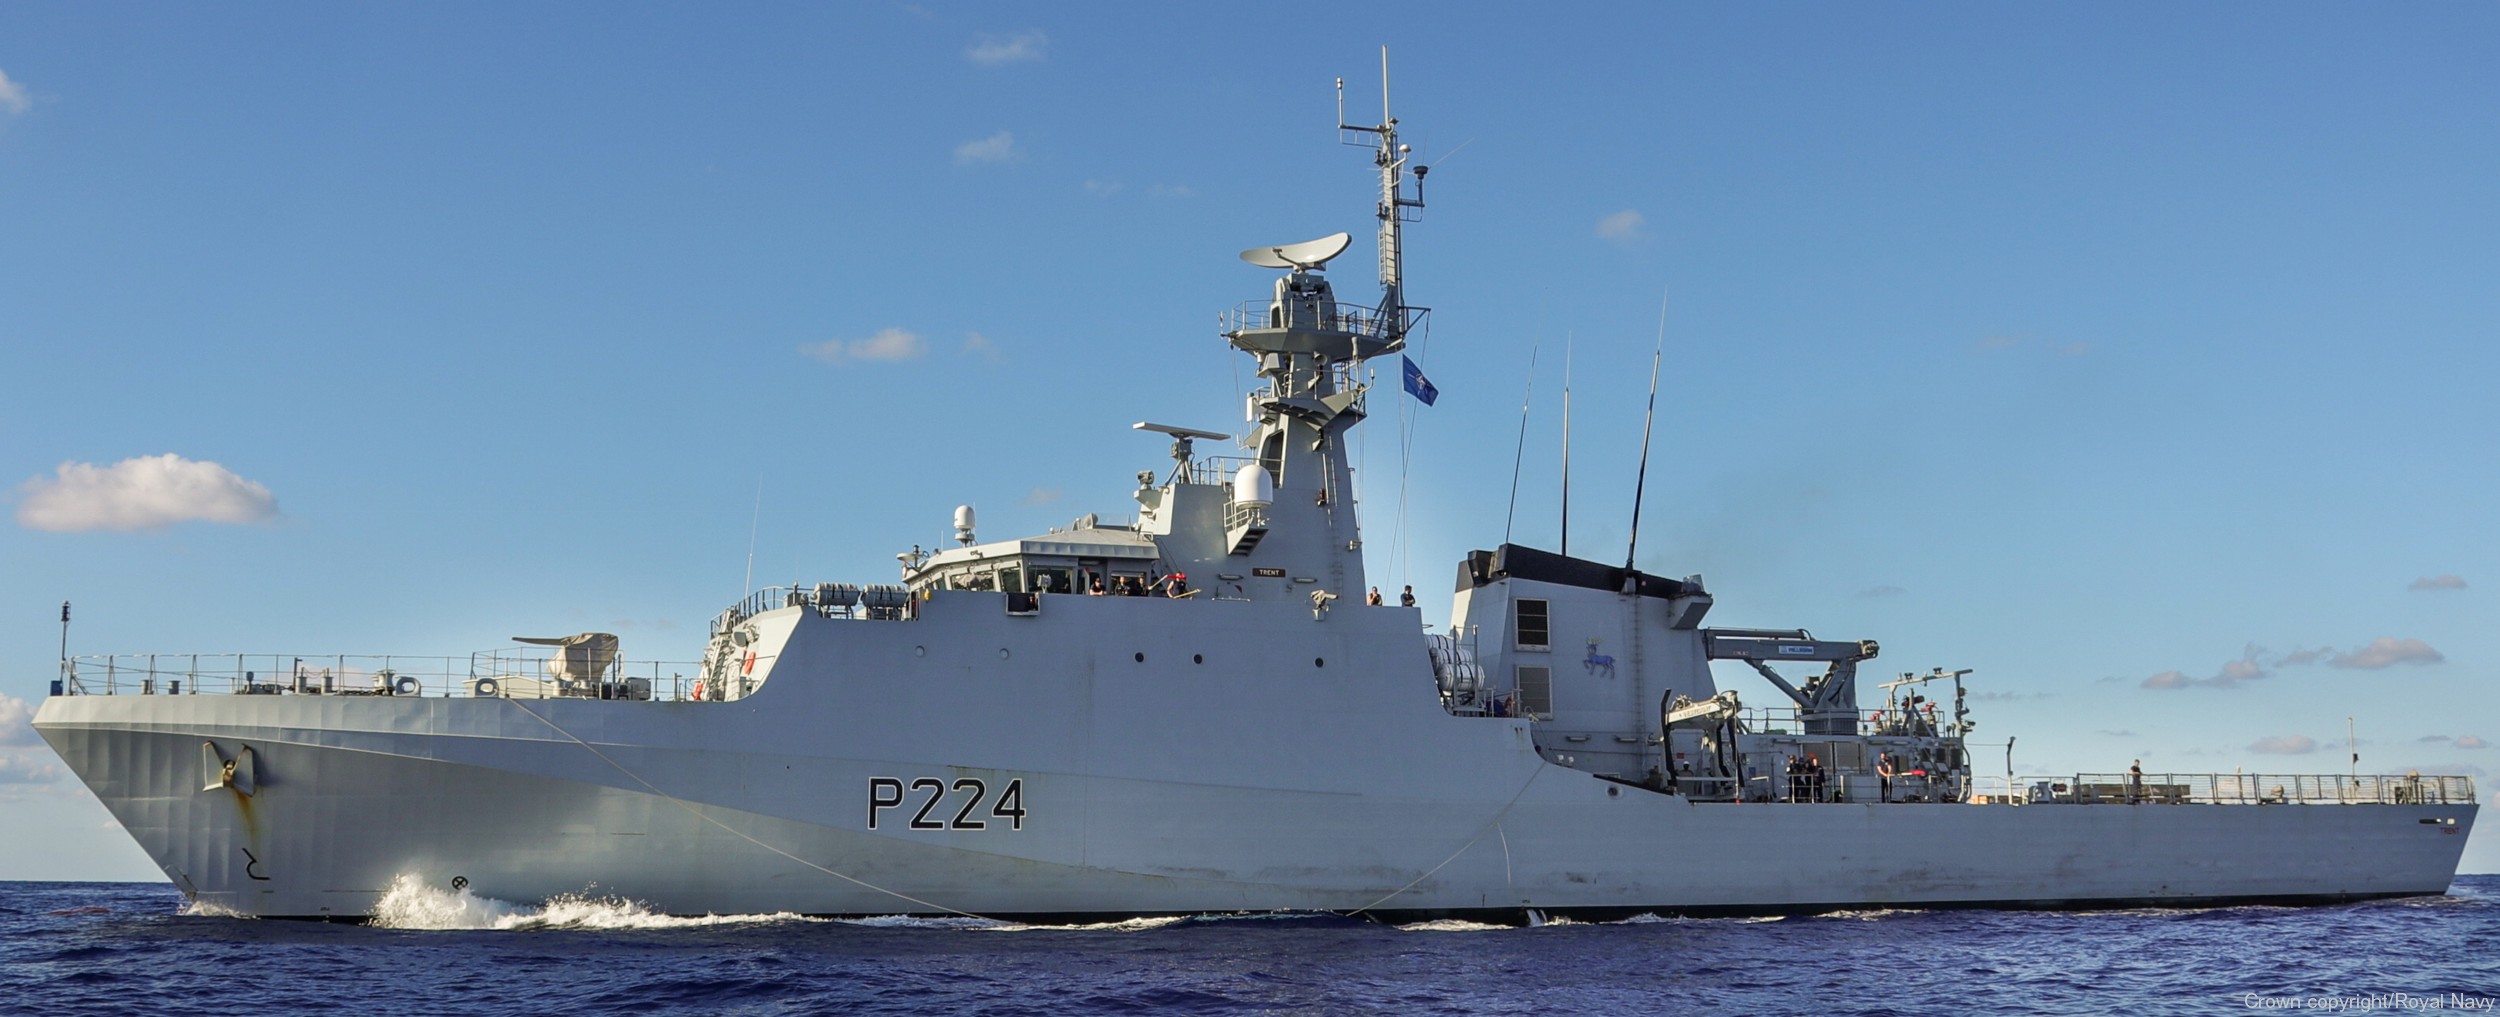 p224 hms trent river class offshore patrol vessel opv royal navy 14